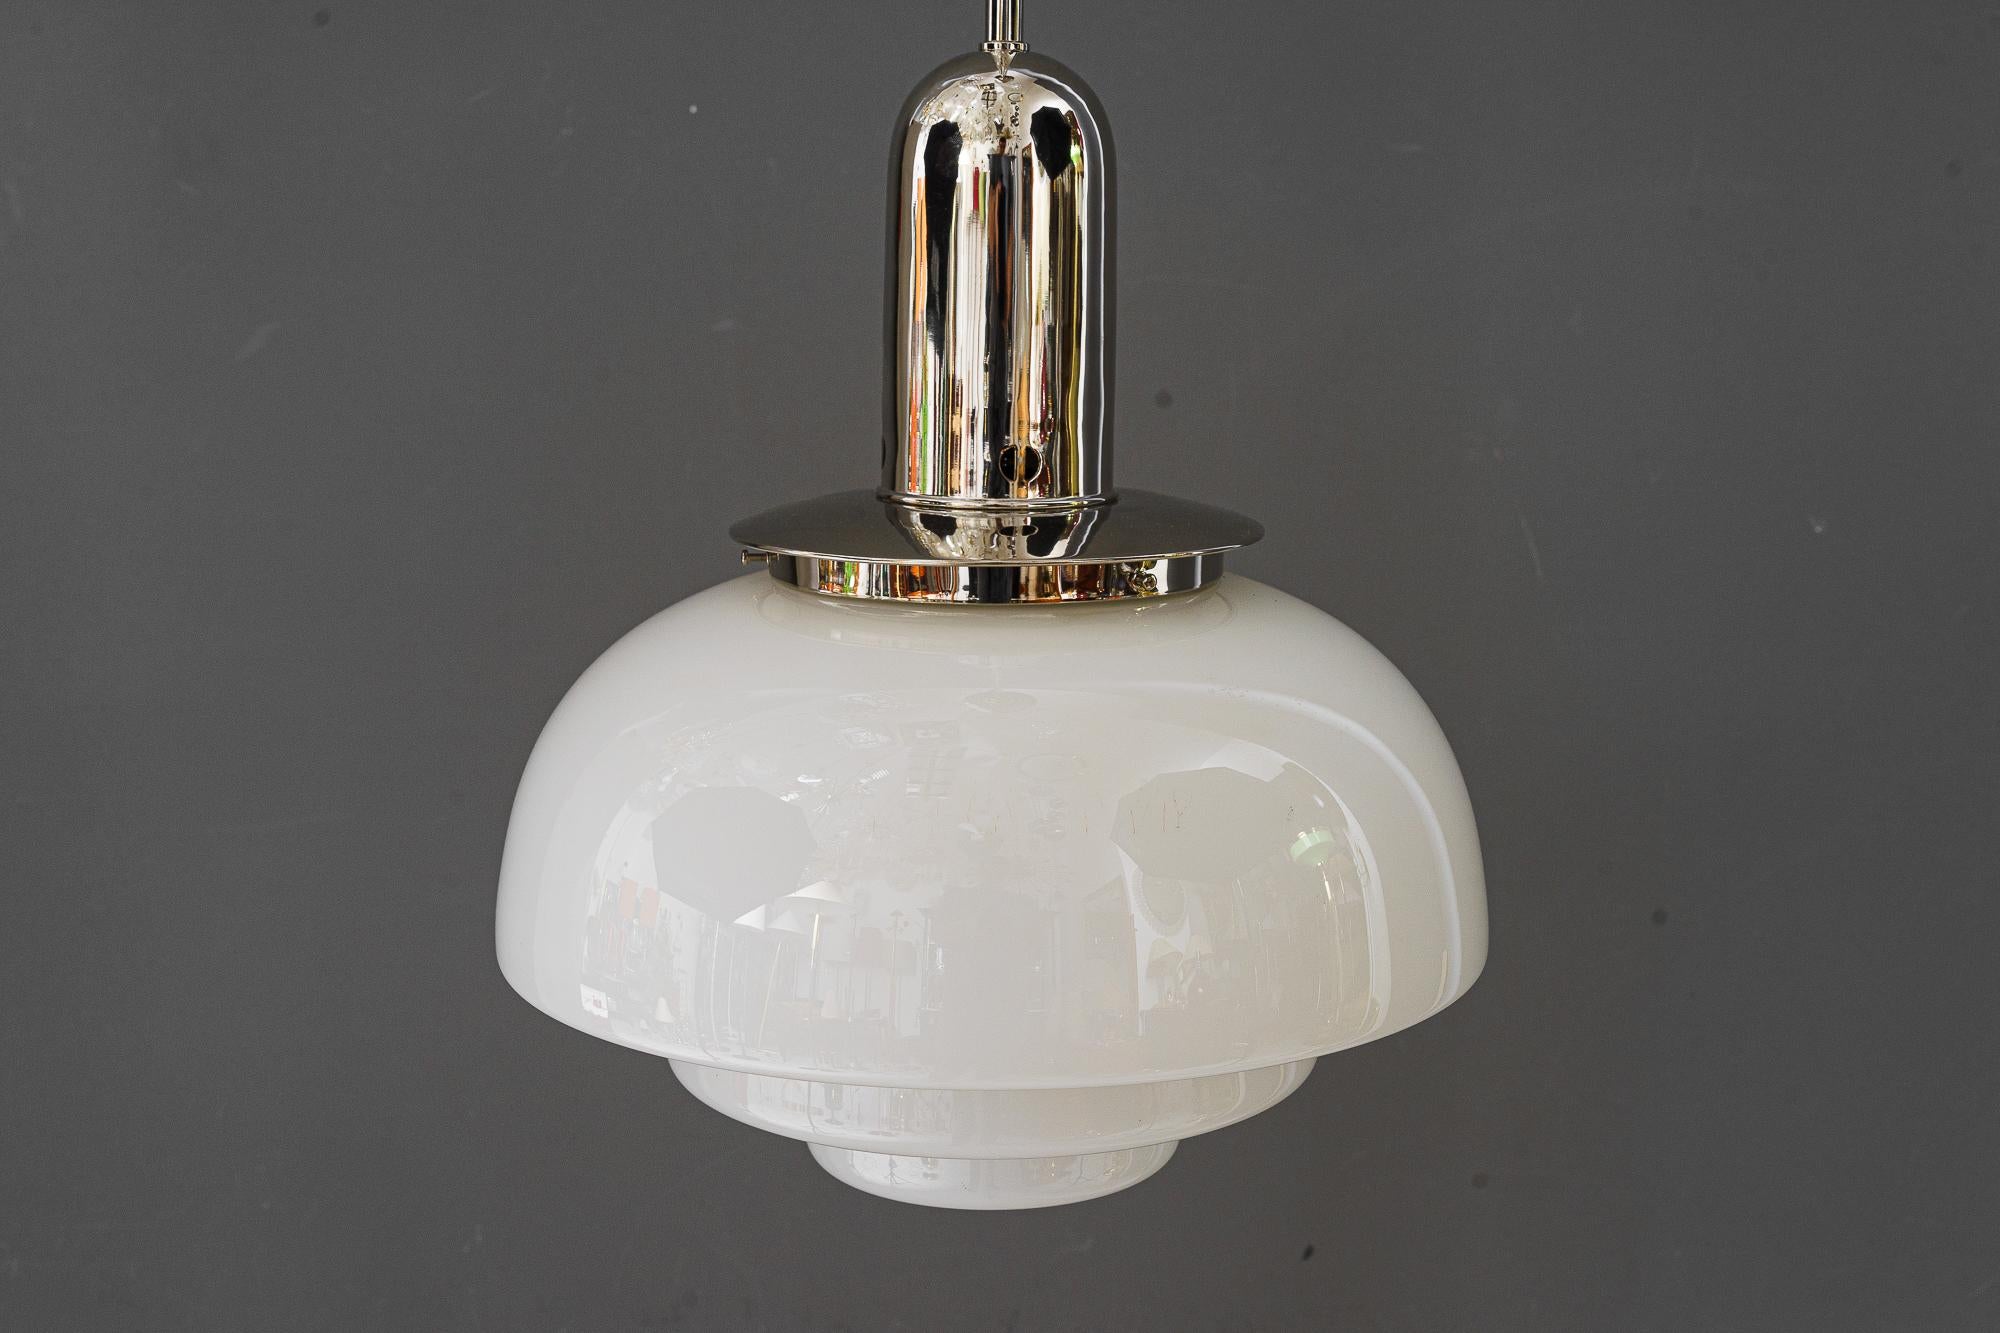 Art Deco Pendant germany around 1920s
Brass nickel plated
Original glass shade